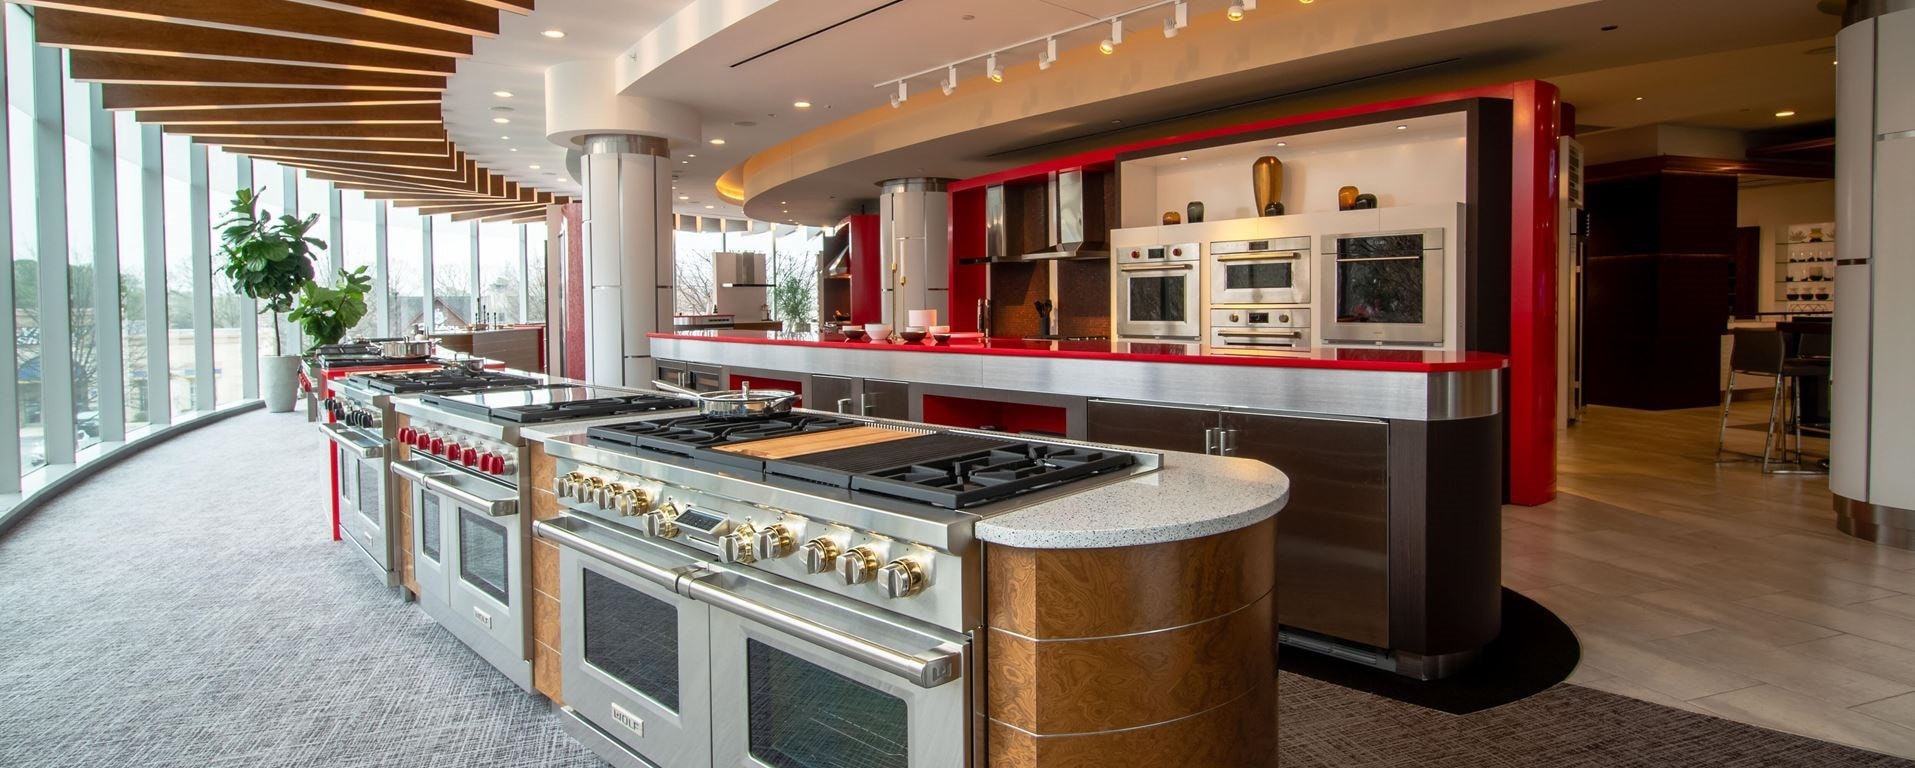 Explore luxury kitchen appliances in person at the Sub-Zero, Wolf, and Cove Showroom located in Atlanta, Georgia